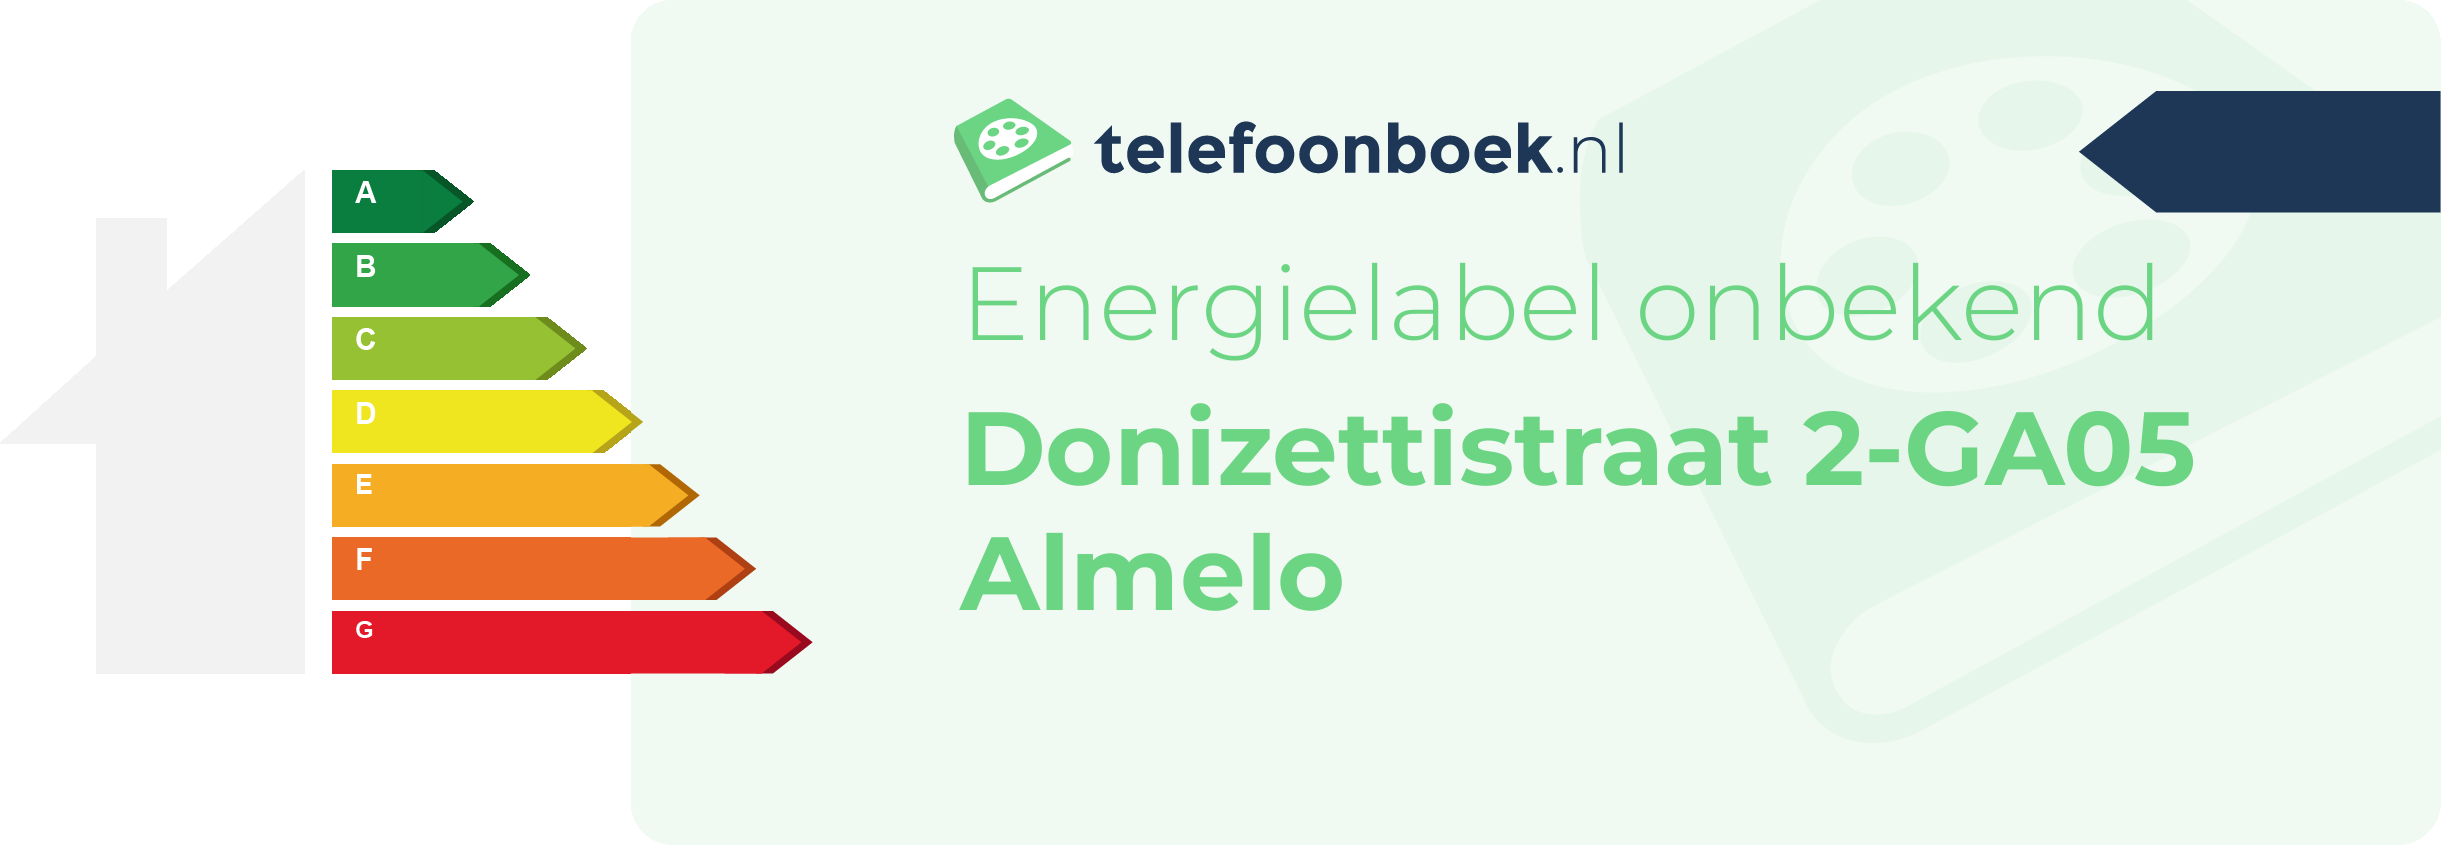 Energielabel Donizettistraat 2-GA05 Almelo